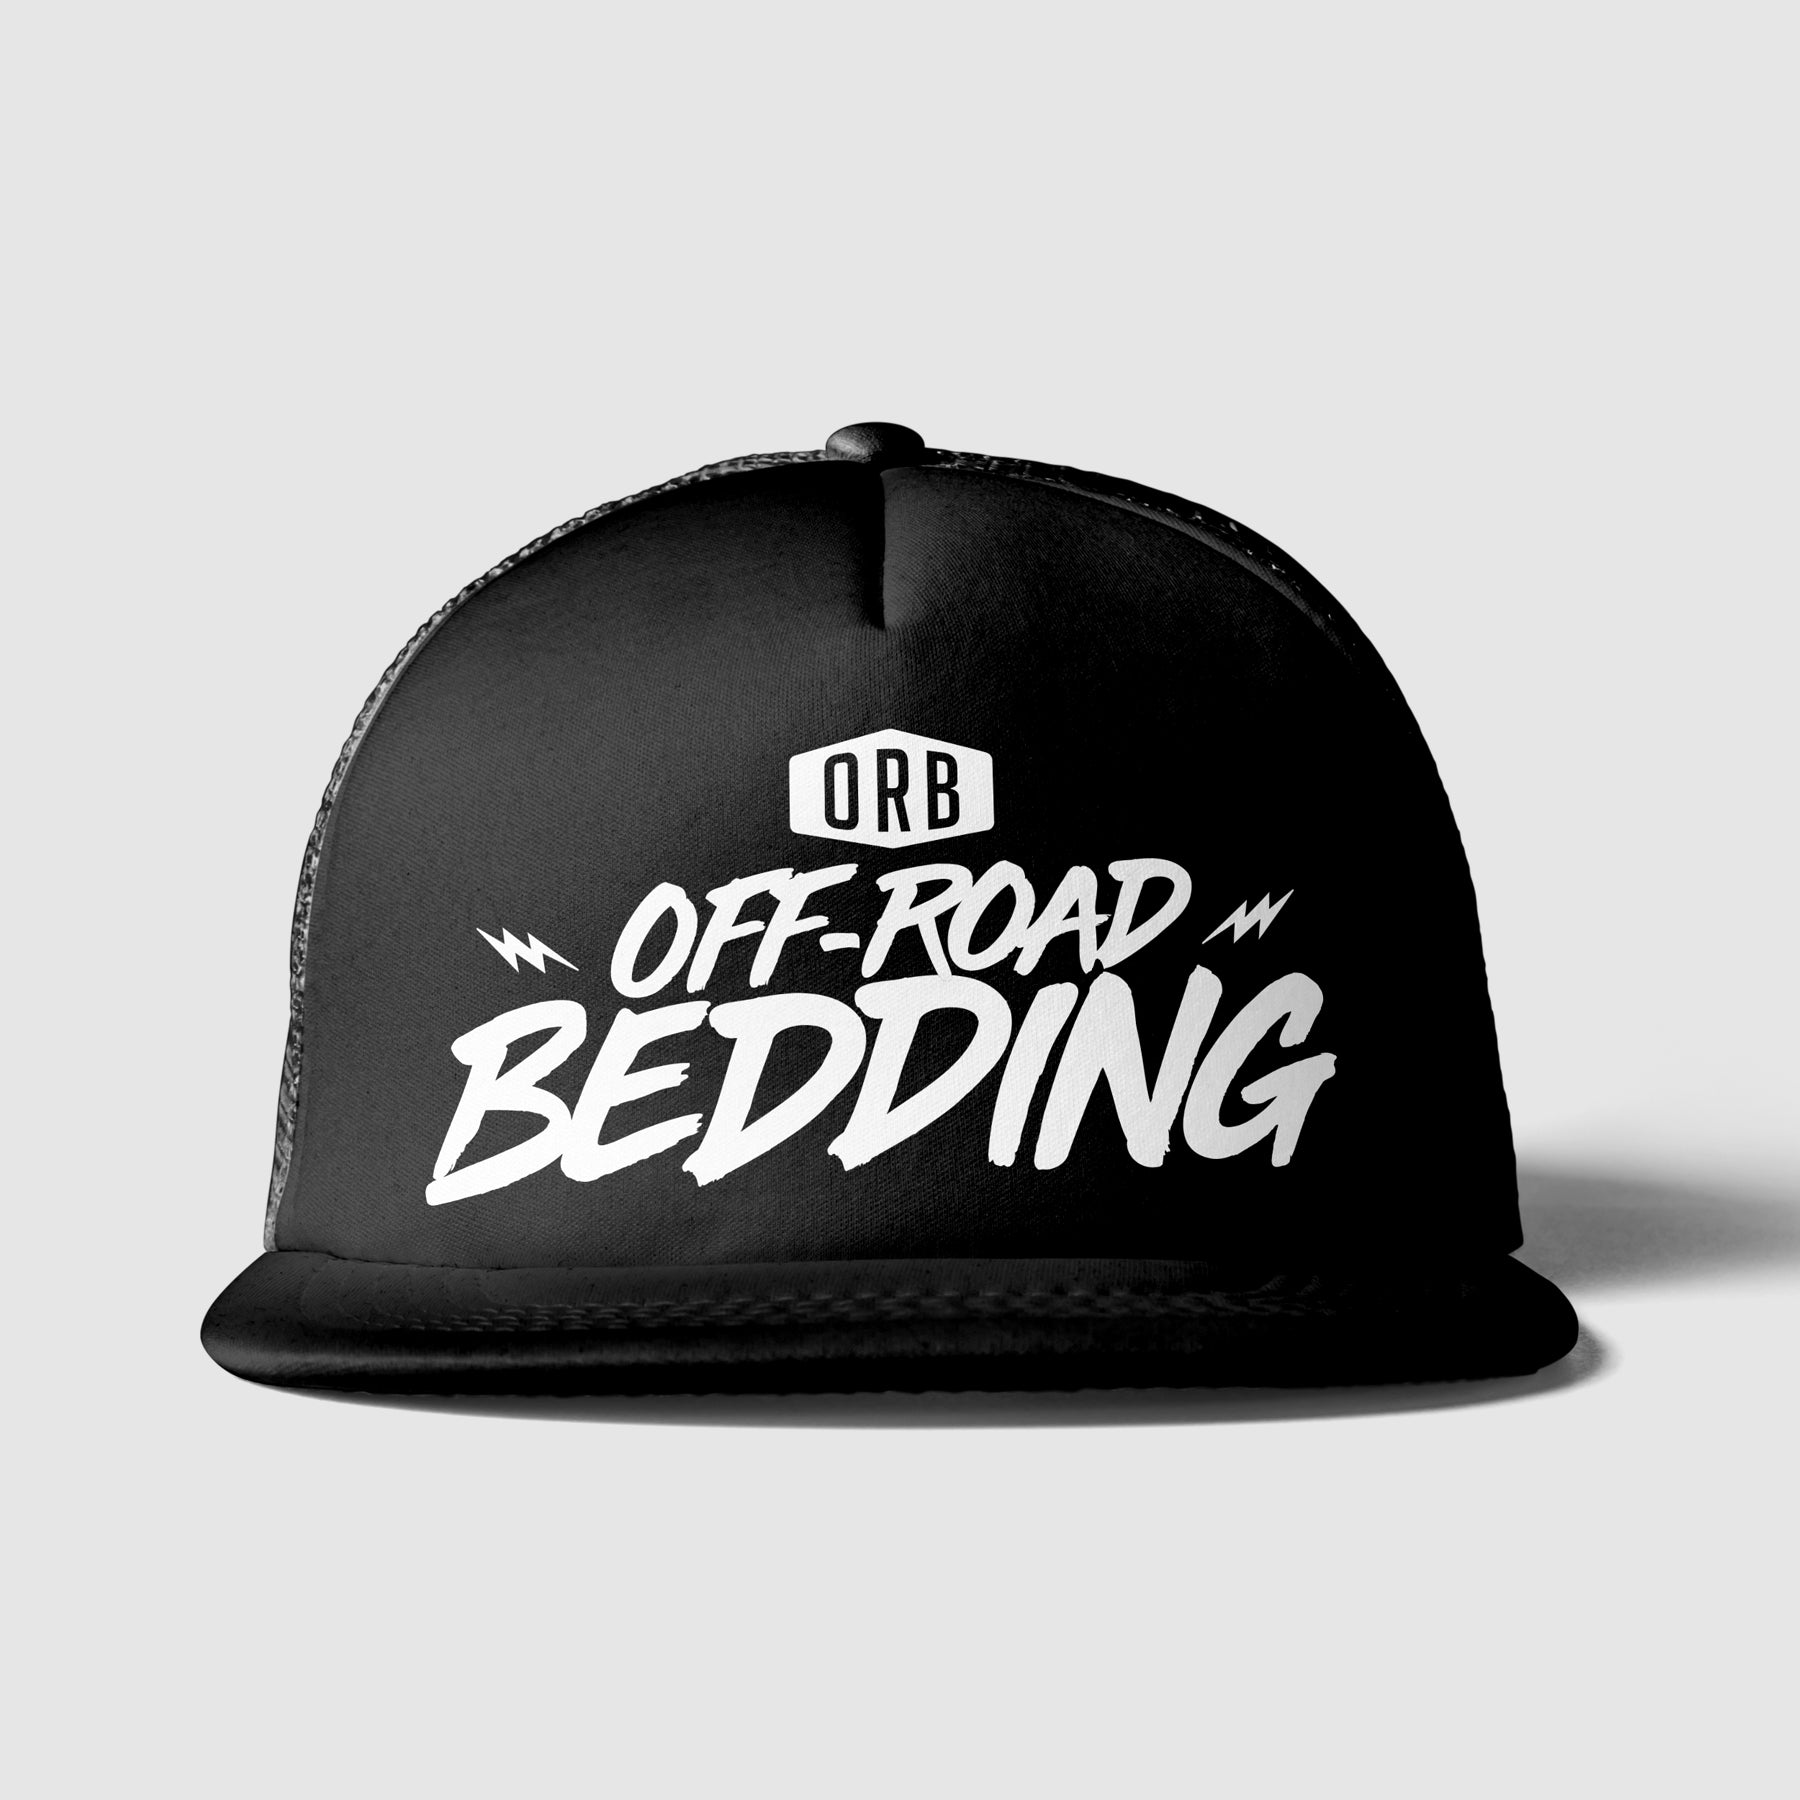 Off-Road Bedding Trucker Hat - Black Trucker Hat